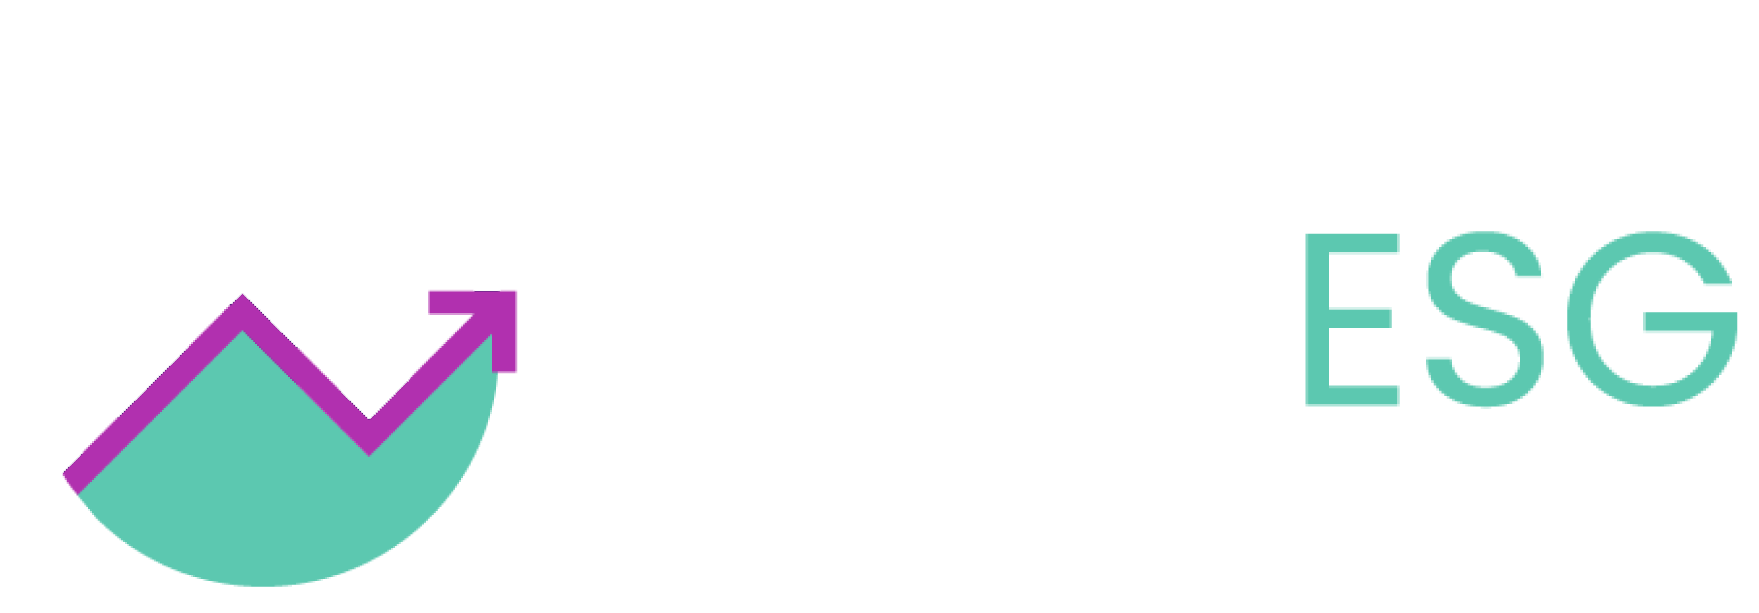 AccelESG